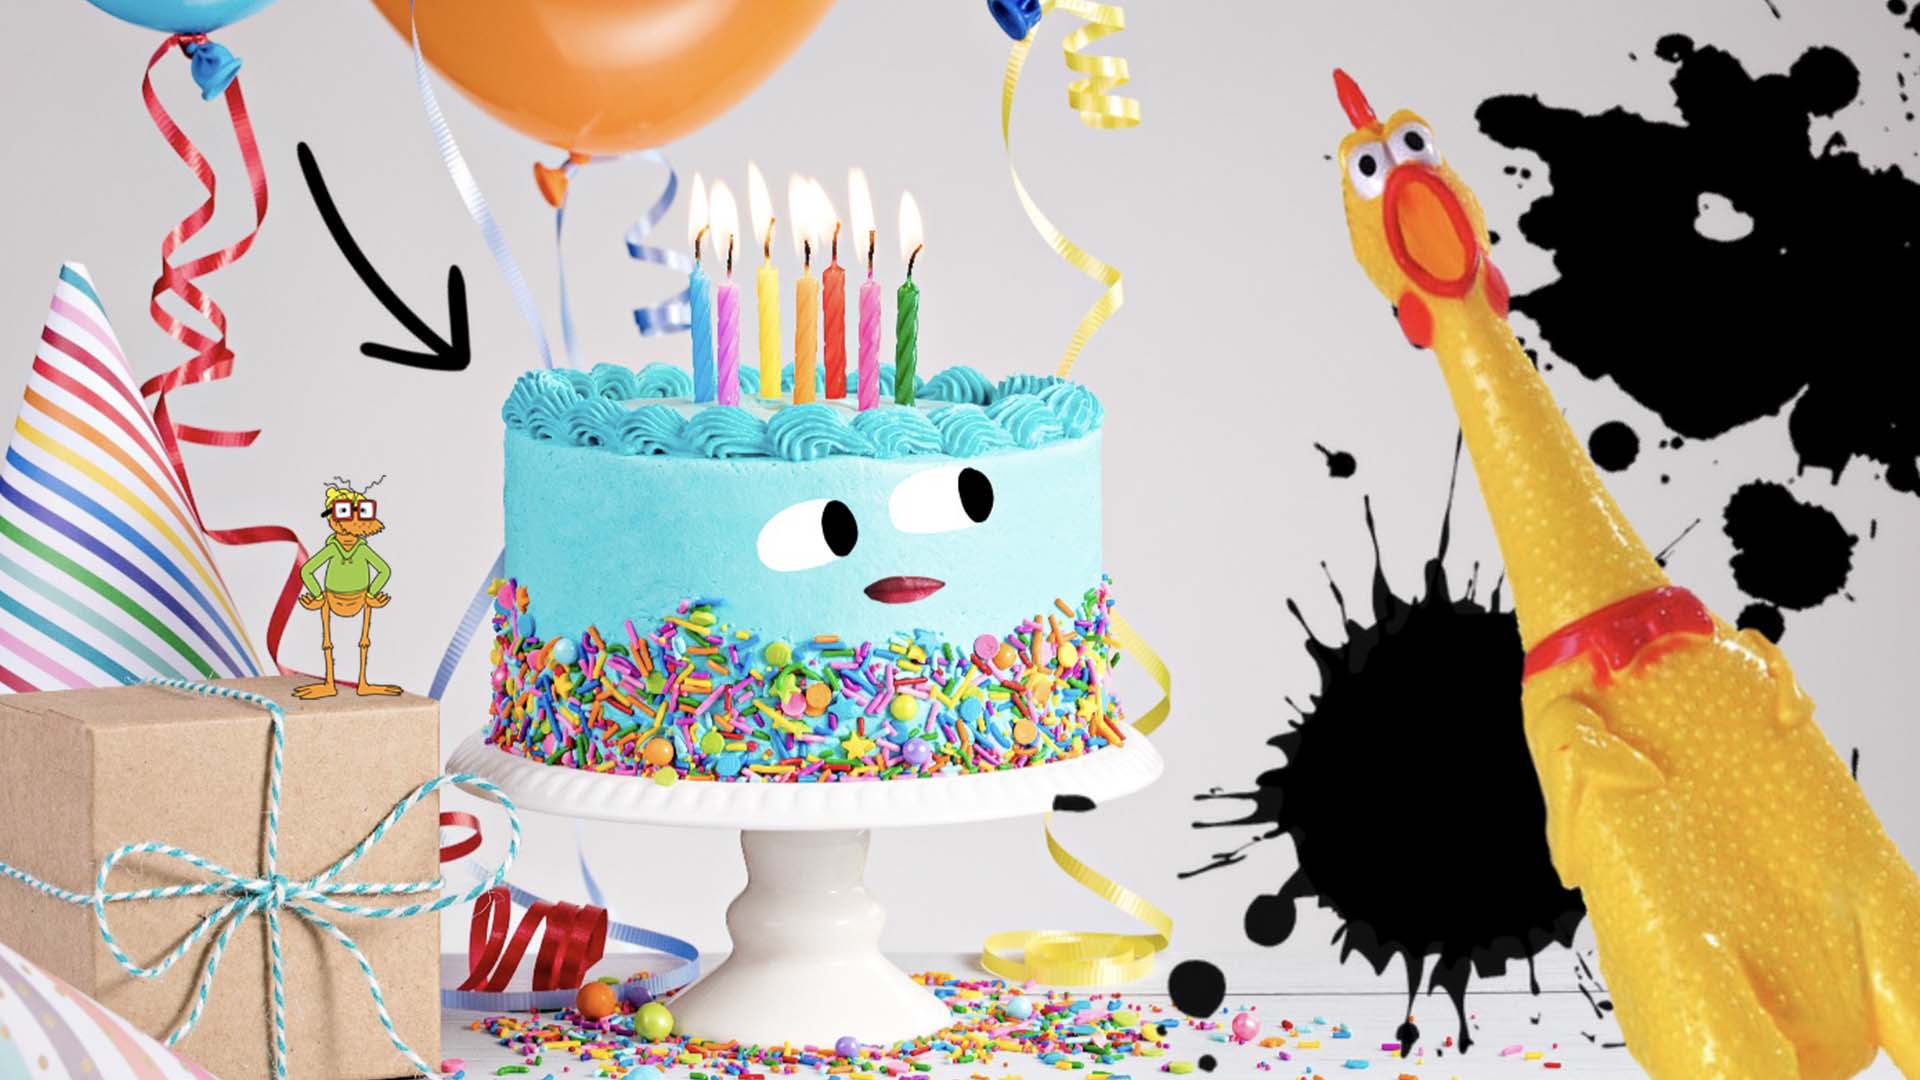 Pieface Flea’s birthday cake